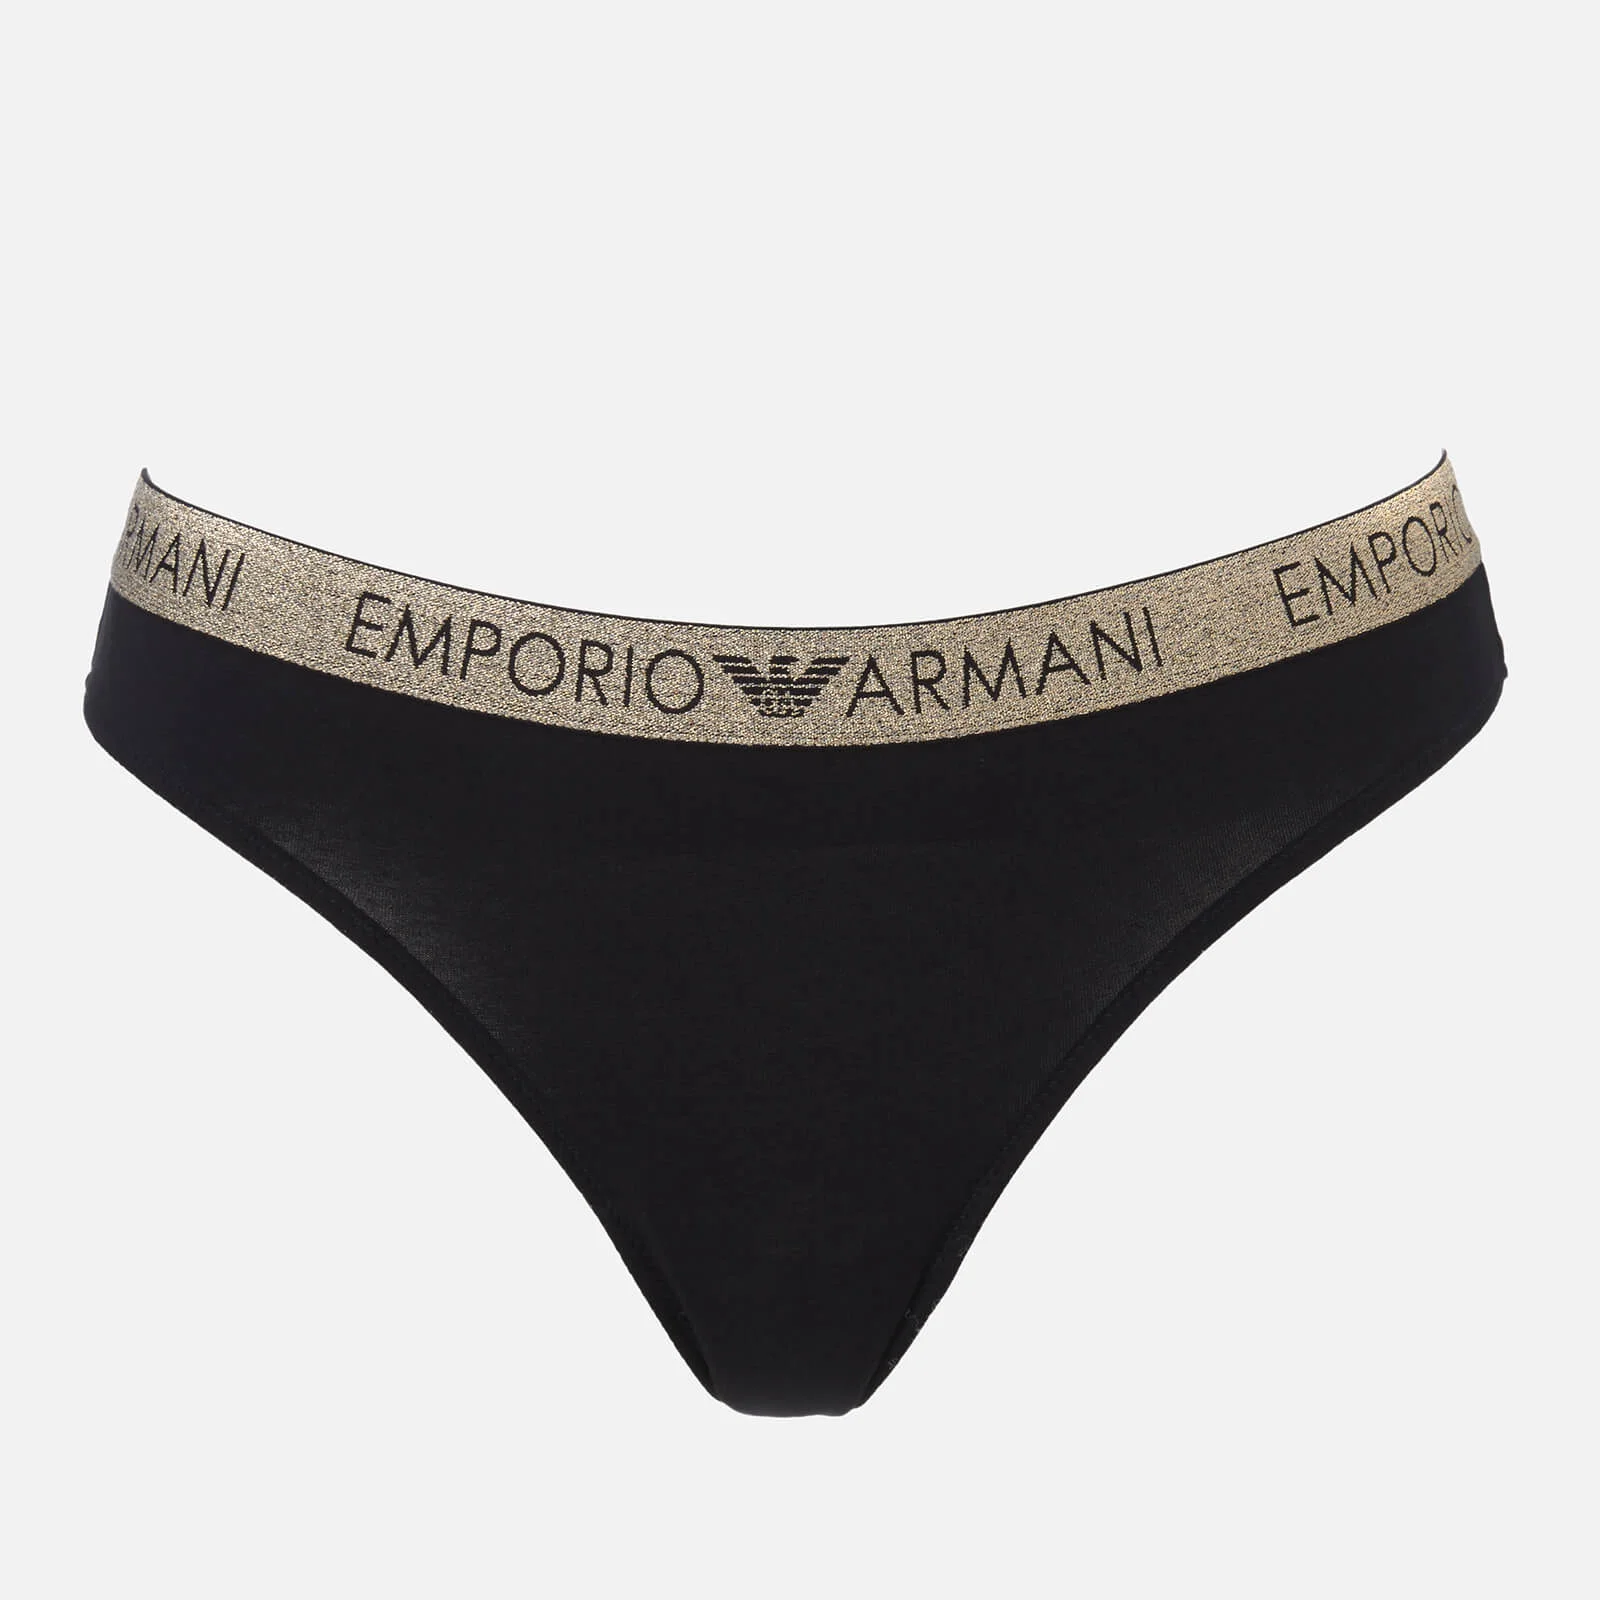 Emporio Armani Women's Holiday Cotton Thong - Black Image 1